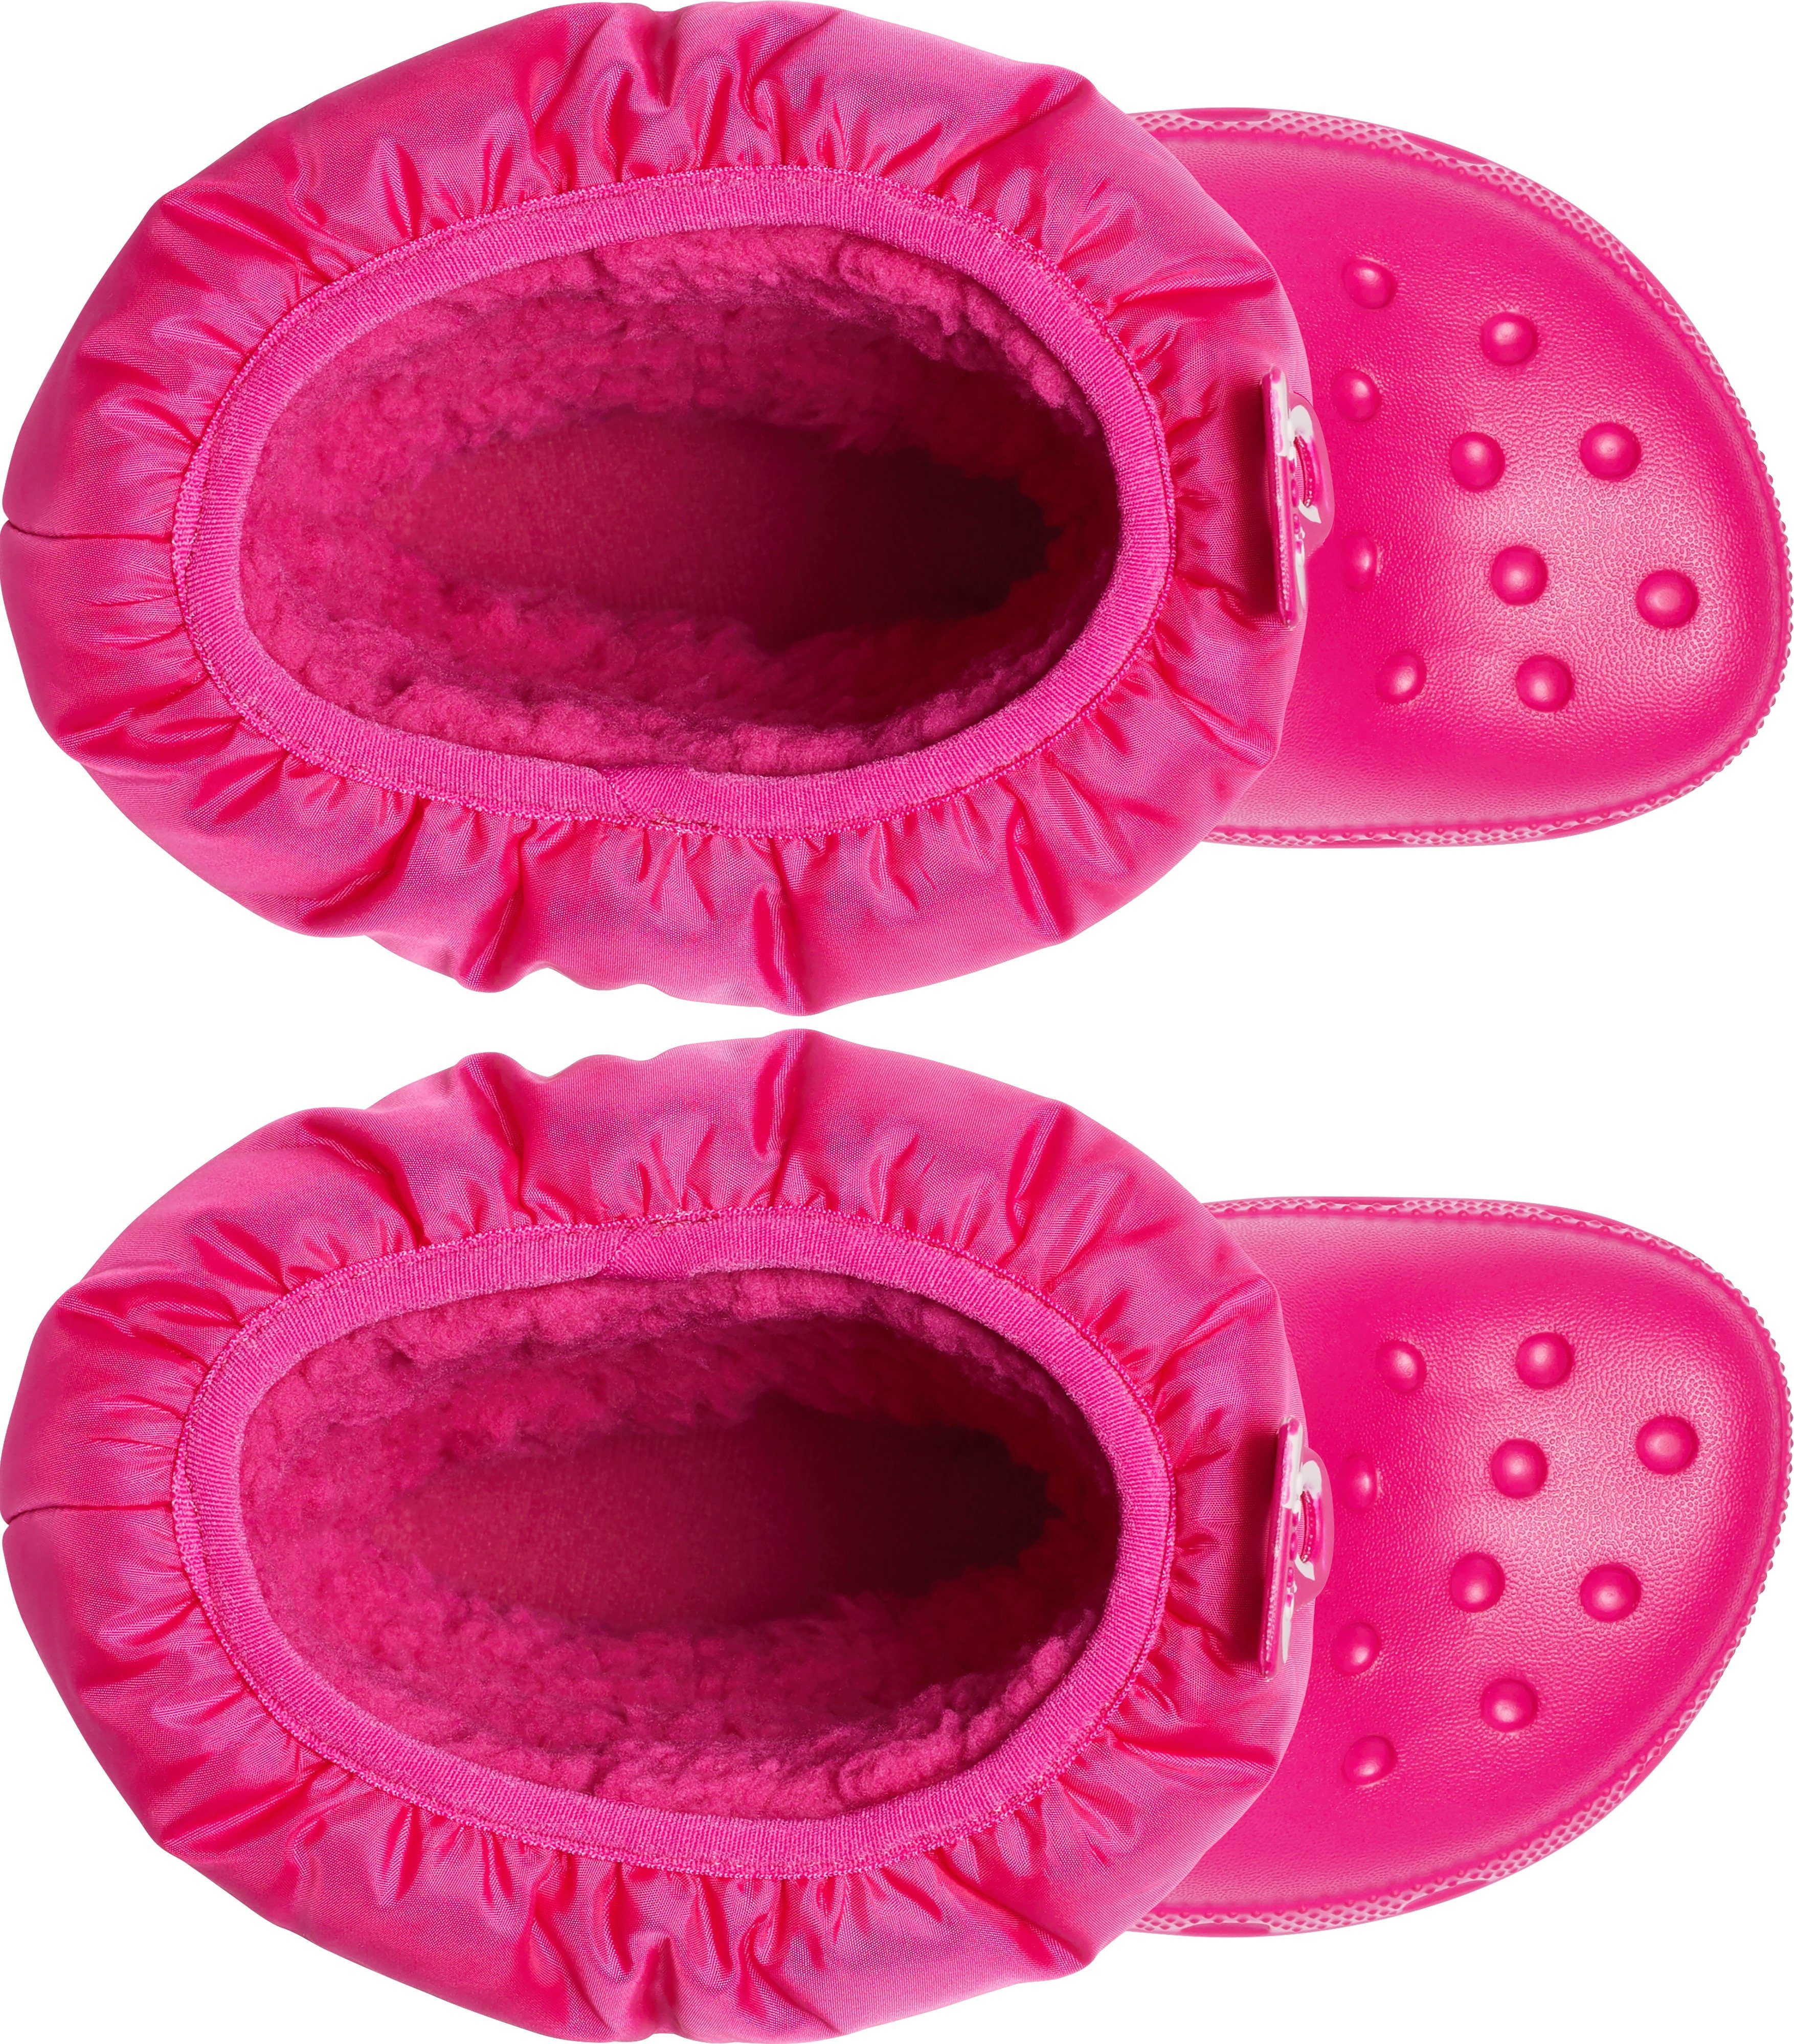 Crocs CLASSIC NEO PUFF BOOT pink-kombiniert K Winterboots Schlupfen zum